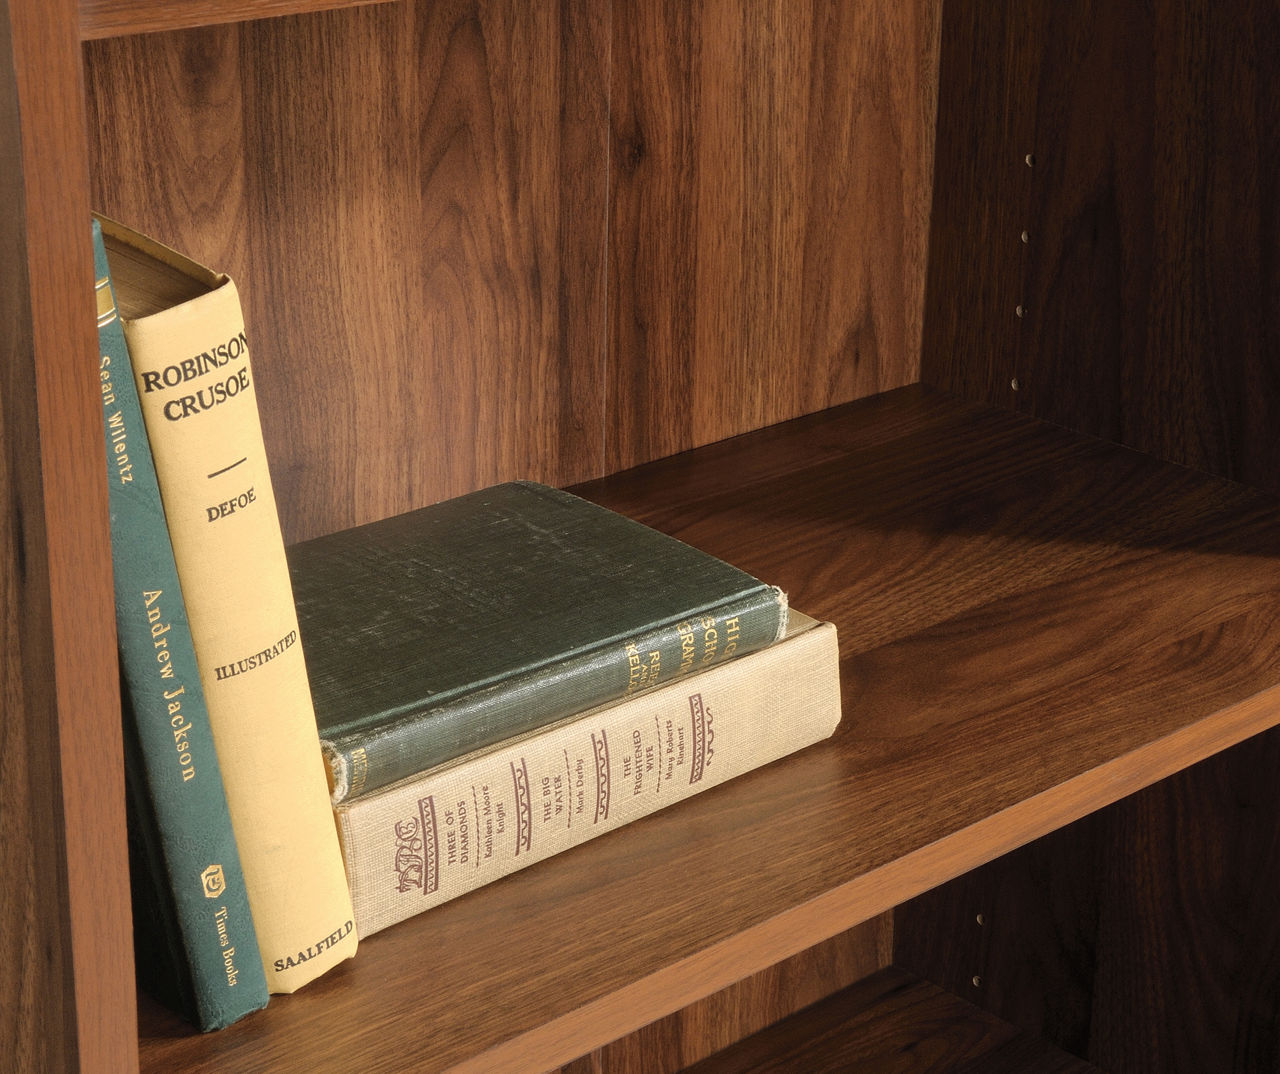 Alderwood Brown 3-Shelf Bookcase